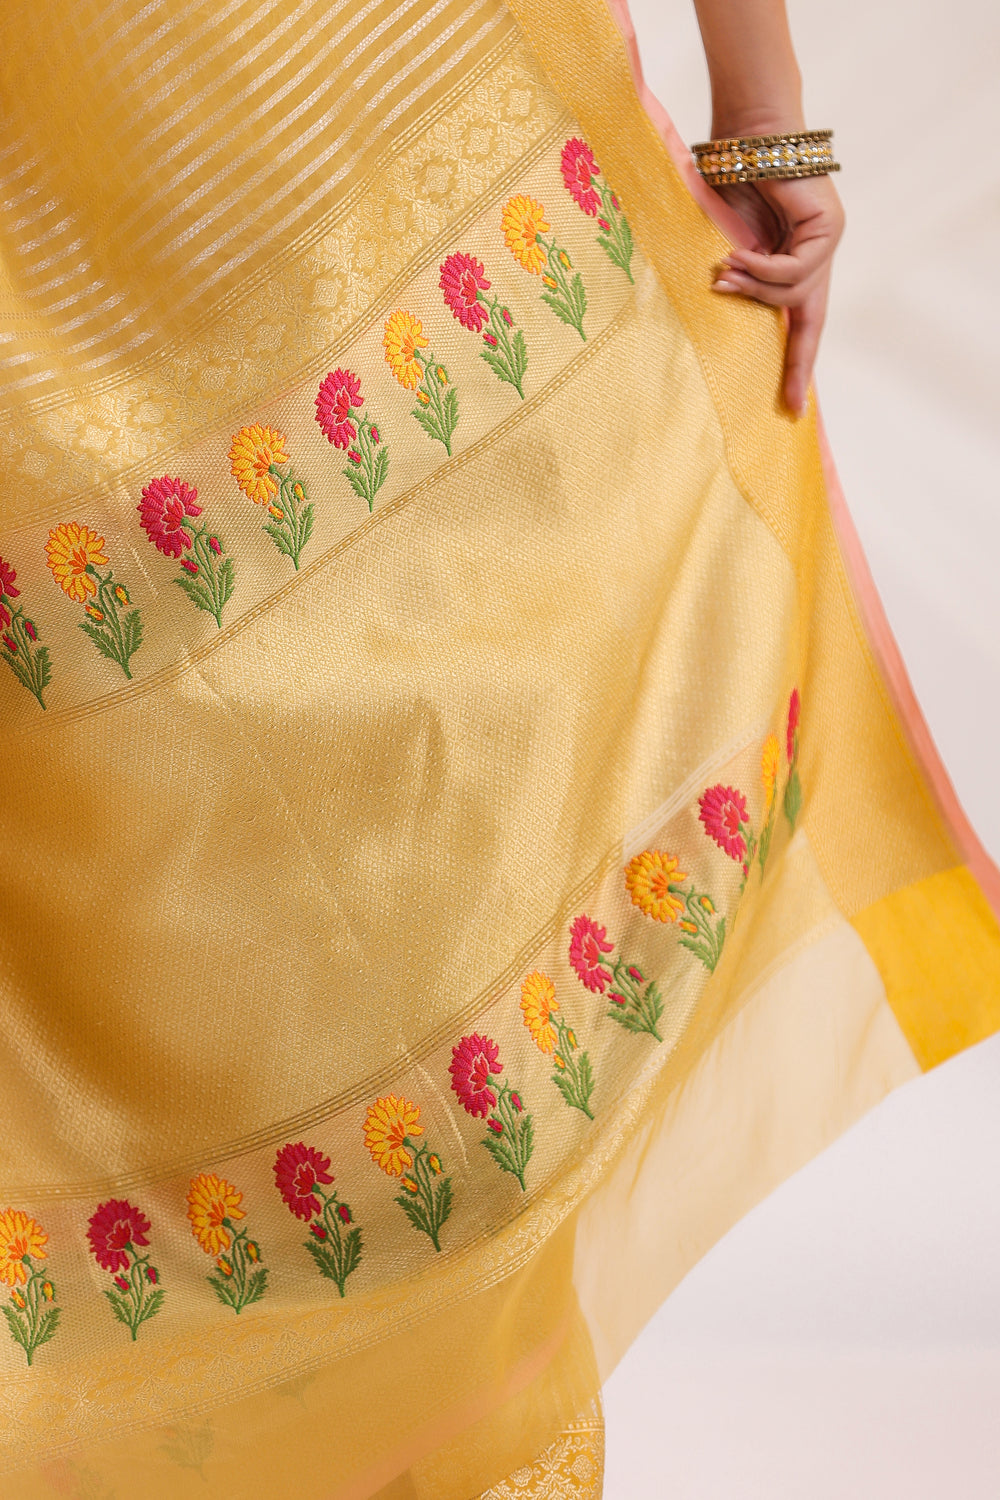 Handwoven Banarasi Yellow Organza Saree